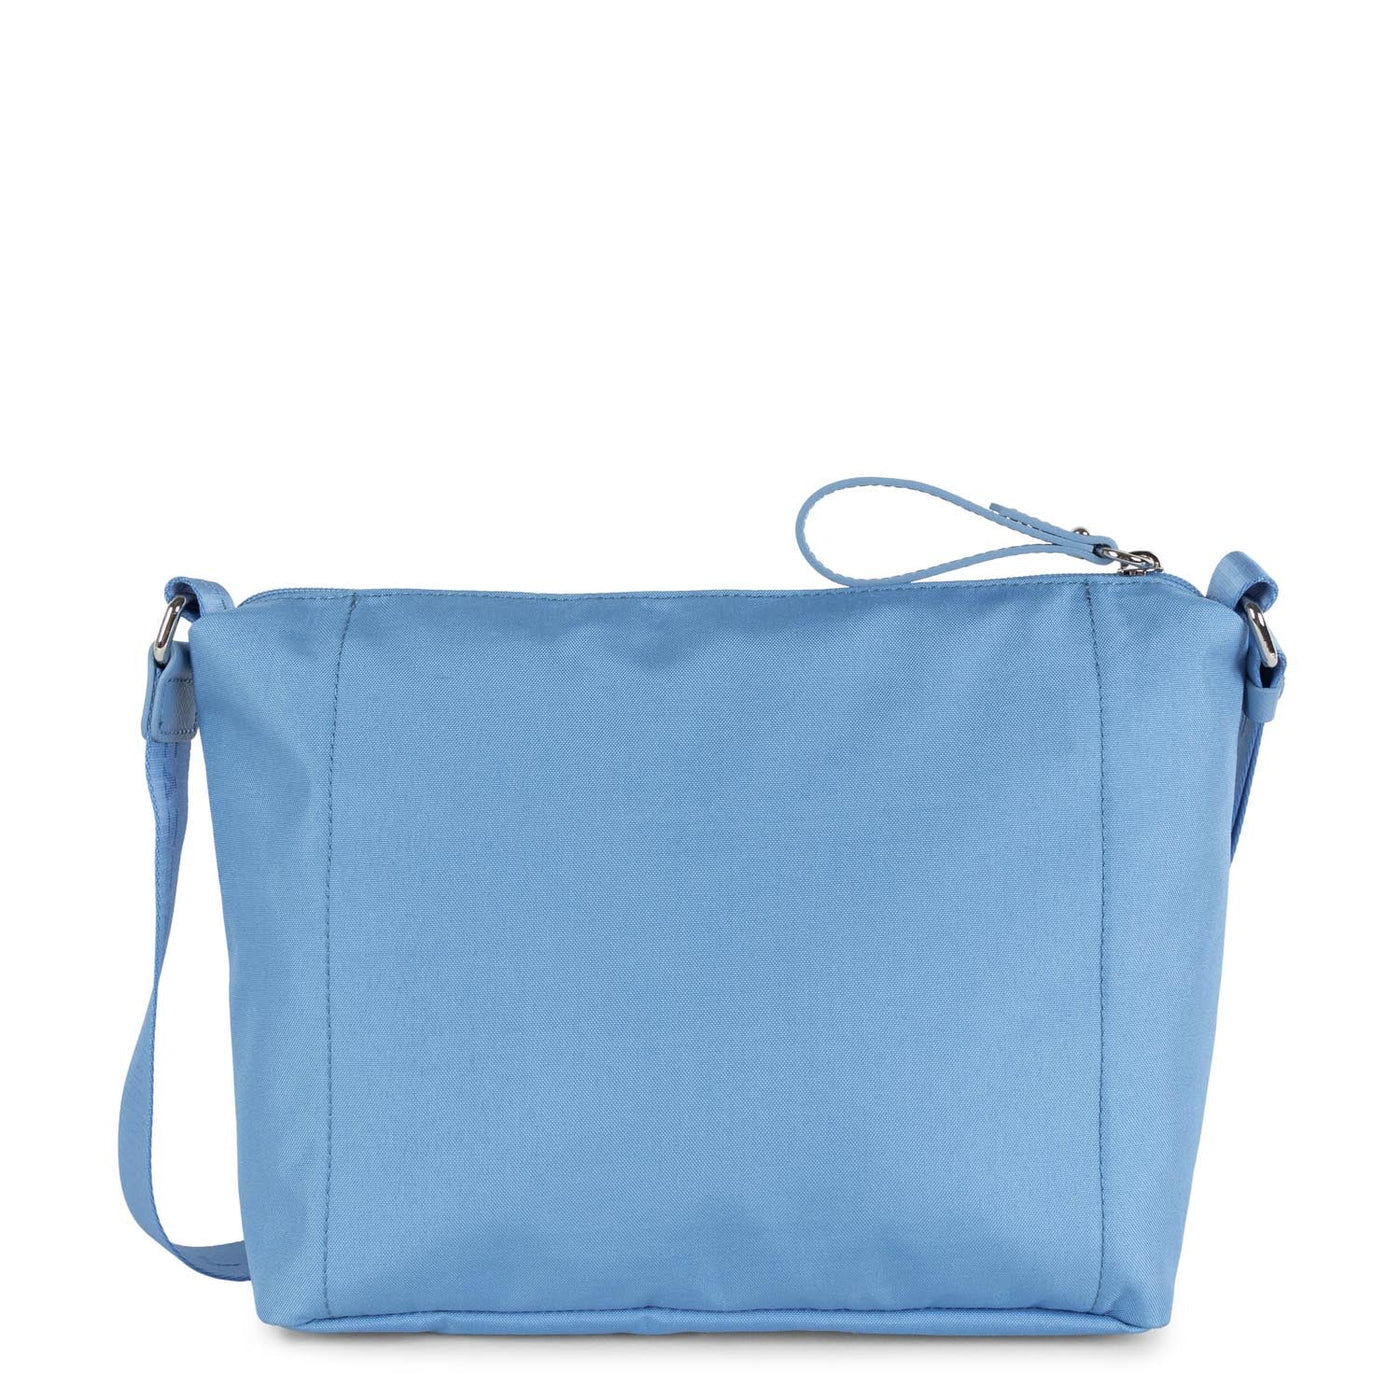 shoulder bag - smart kba #couleur_bleu-azur